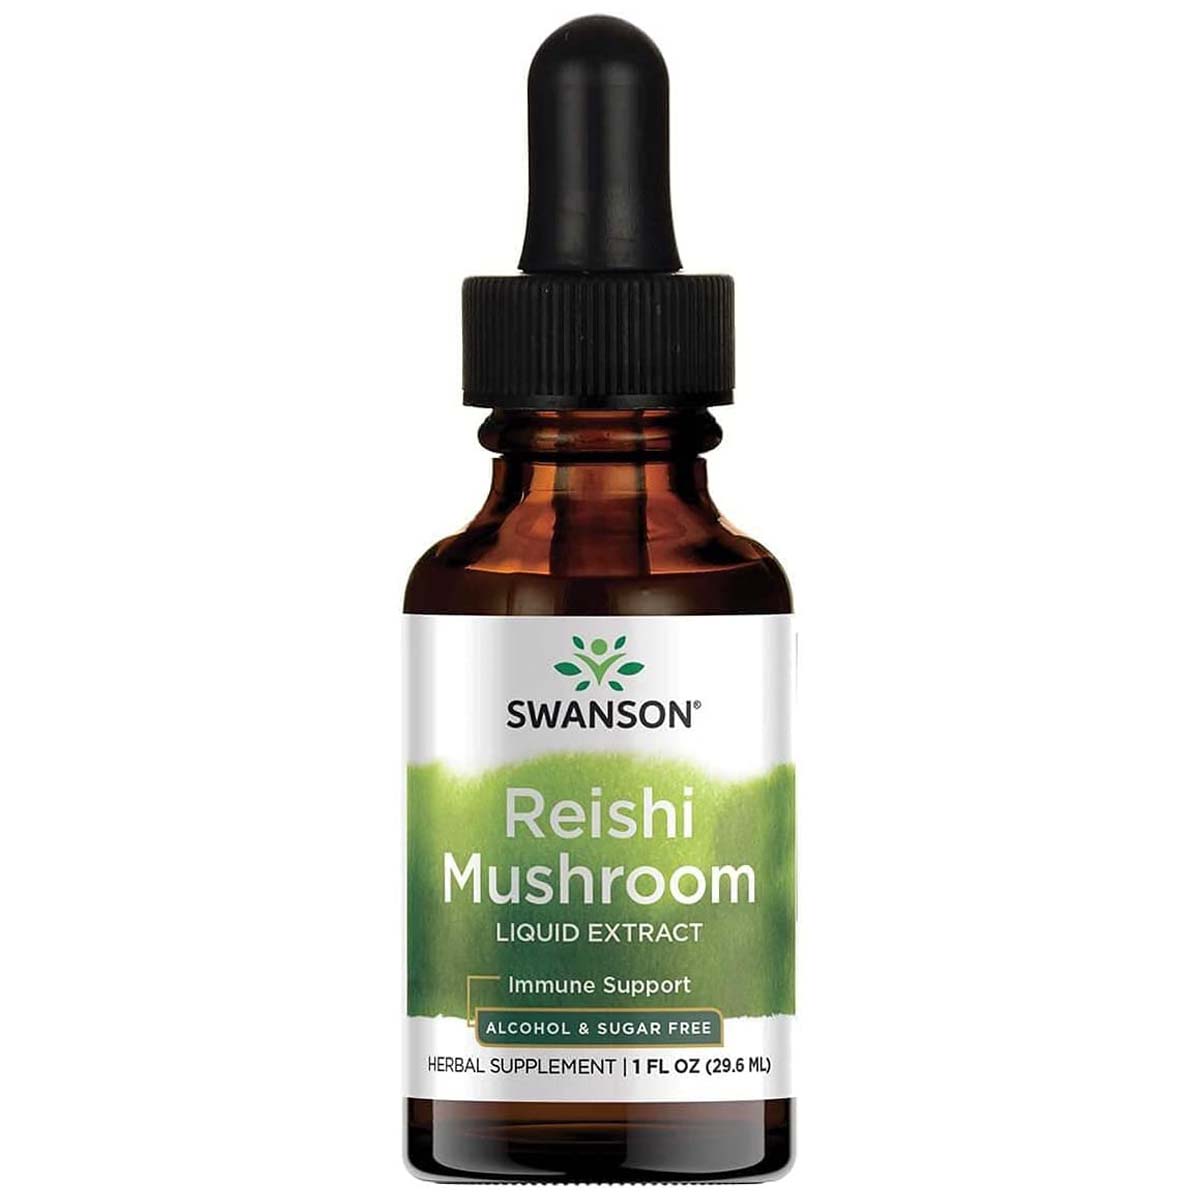 Swanson Reishi Mushroom Liquid Extract 29.6 ML